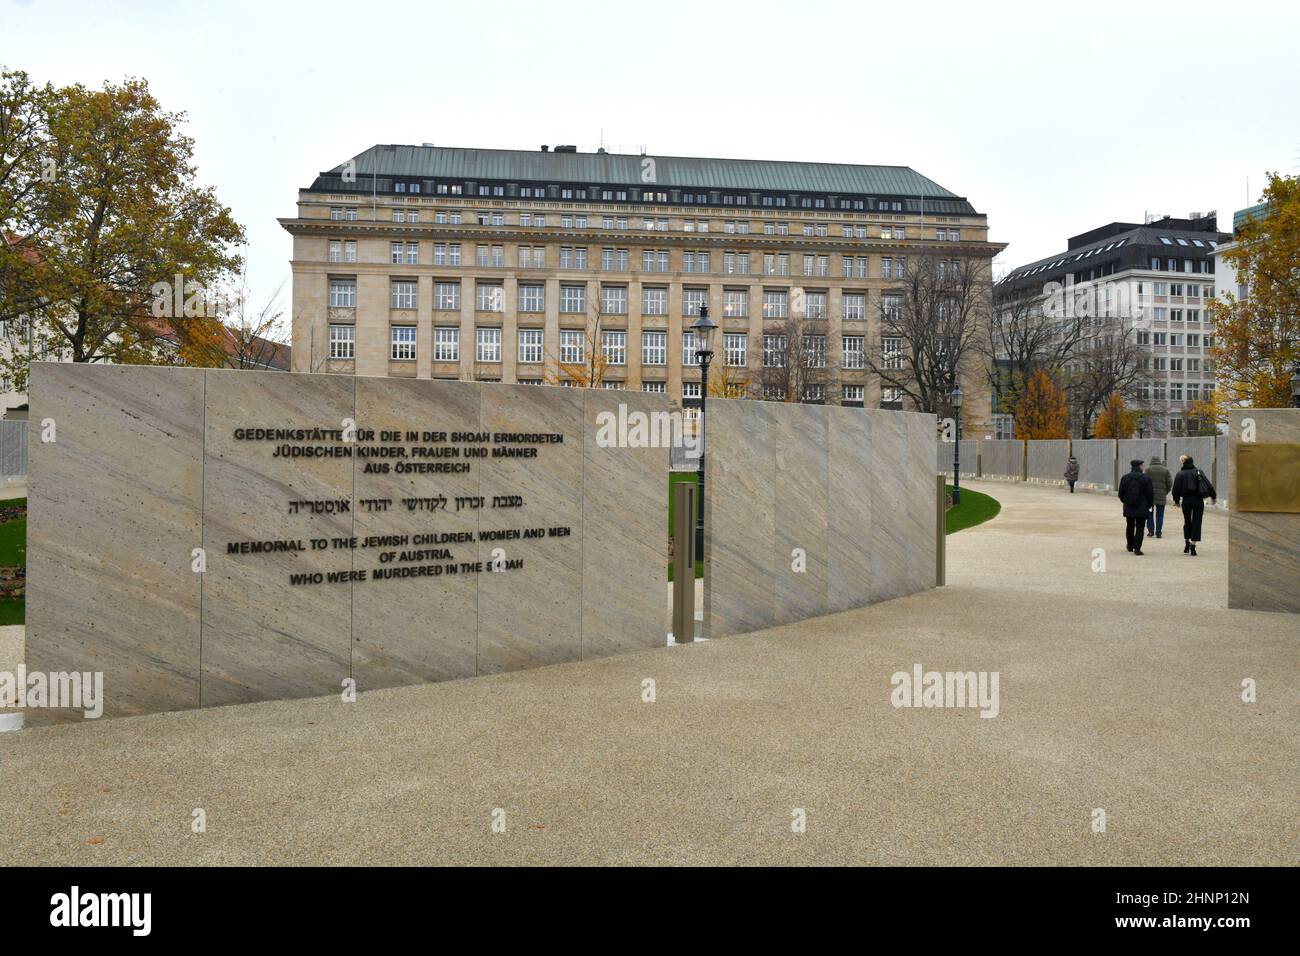 Shoah-Namensmauern-Gedenkstätte in Wien, Österreich, Europa - Shoah walls of names memorial in Vienna, Austria, Europe Stock Photo